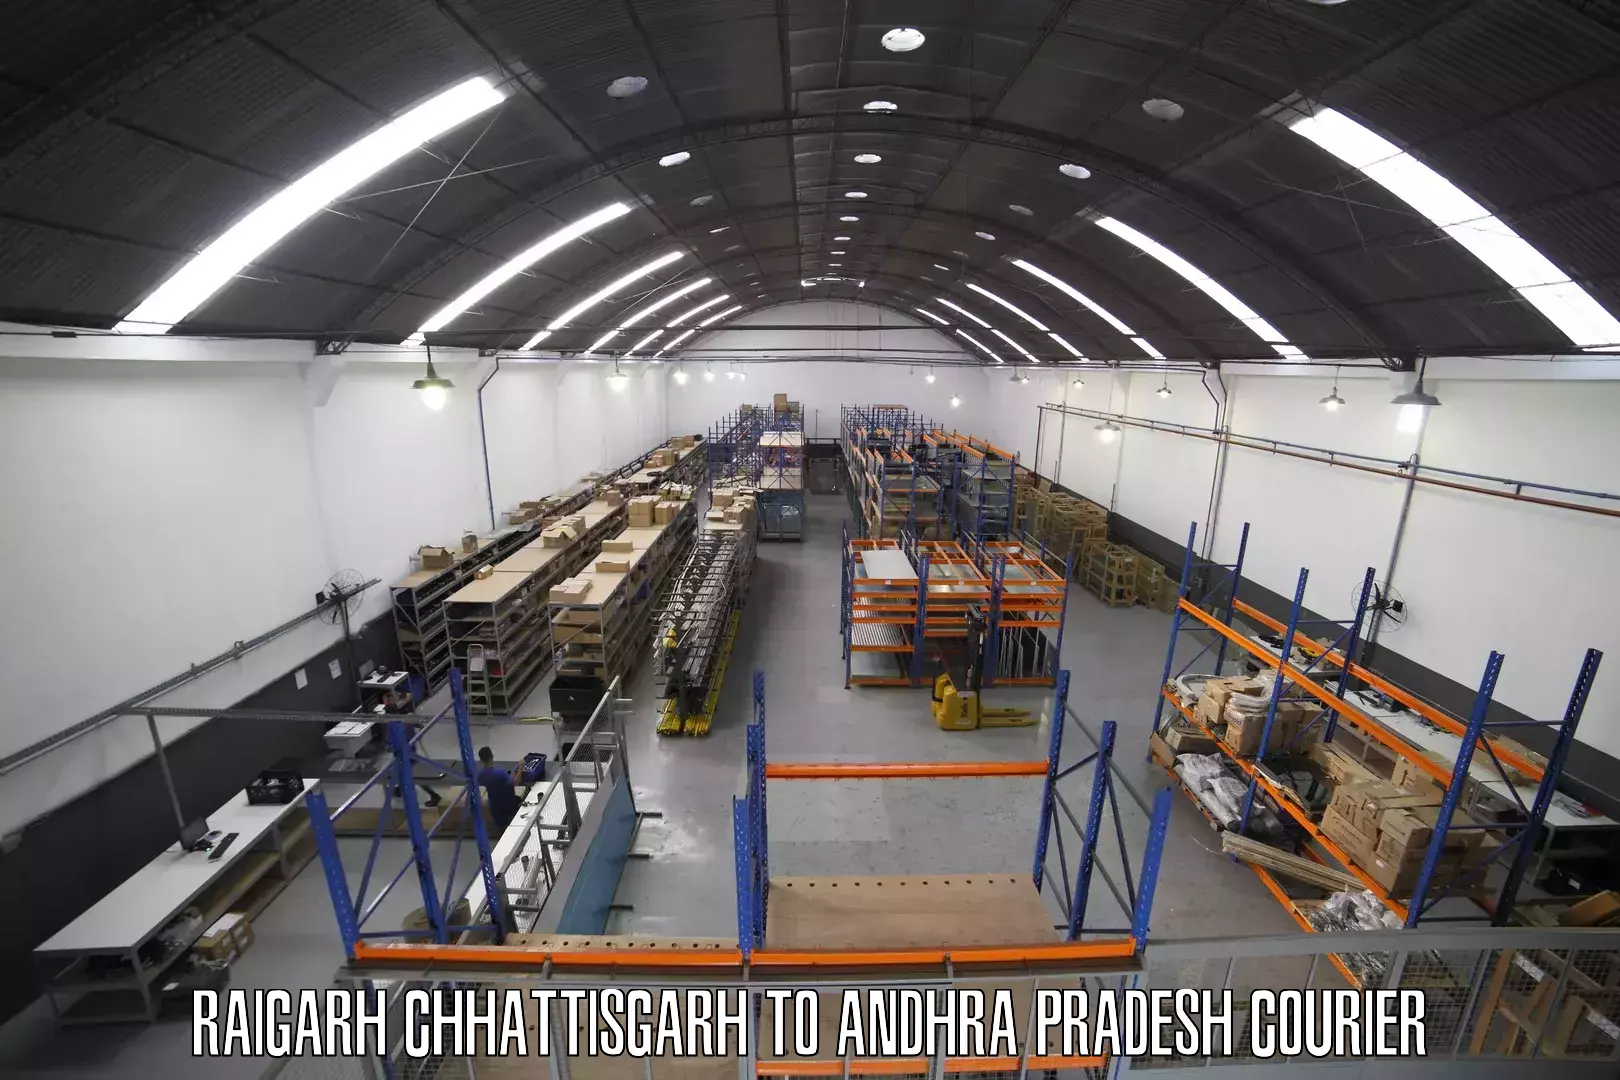 Professional courier services Raigarh Chhattisgarh to Rajahmundry